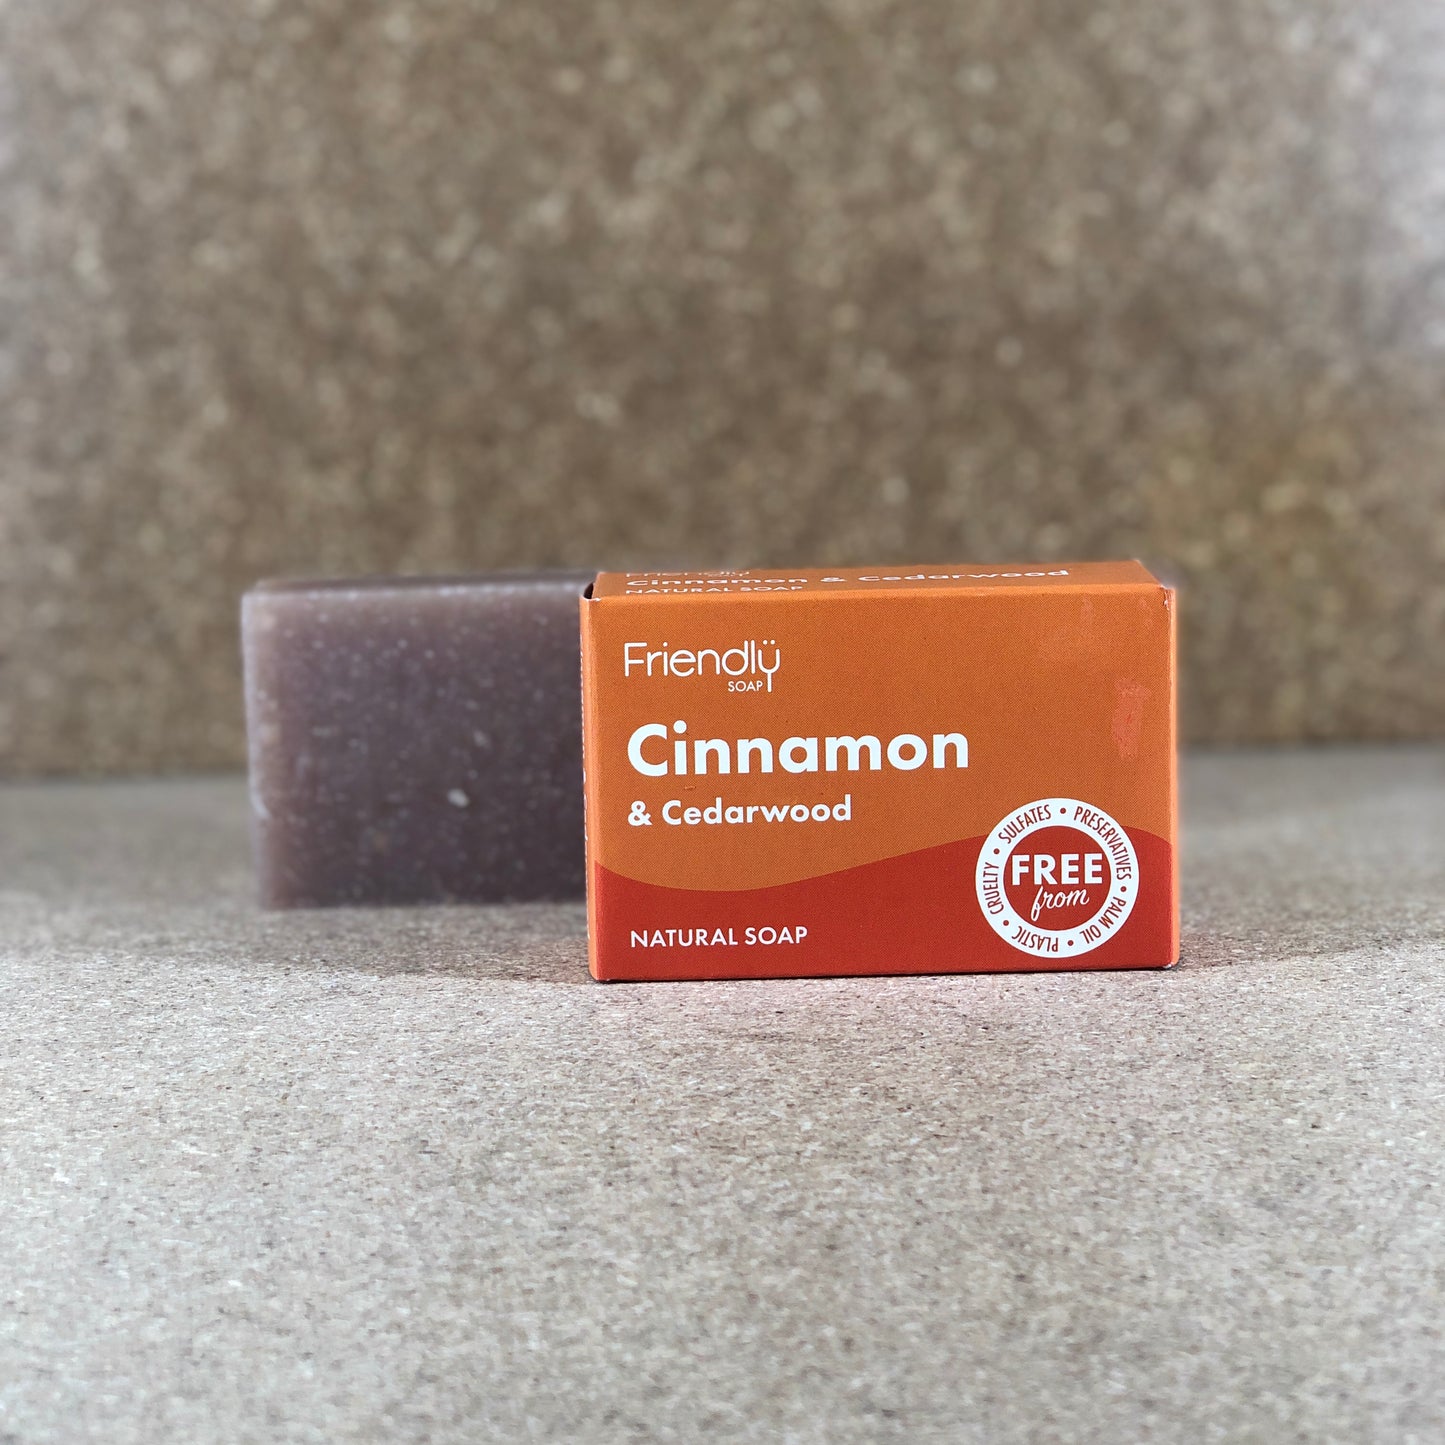 Cinnamon and Cedarwood Soap Bar